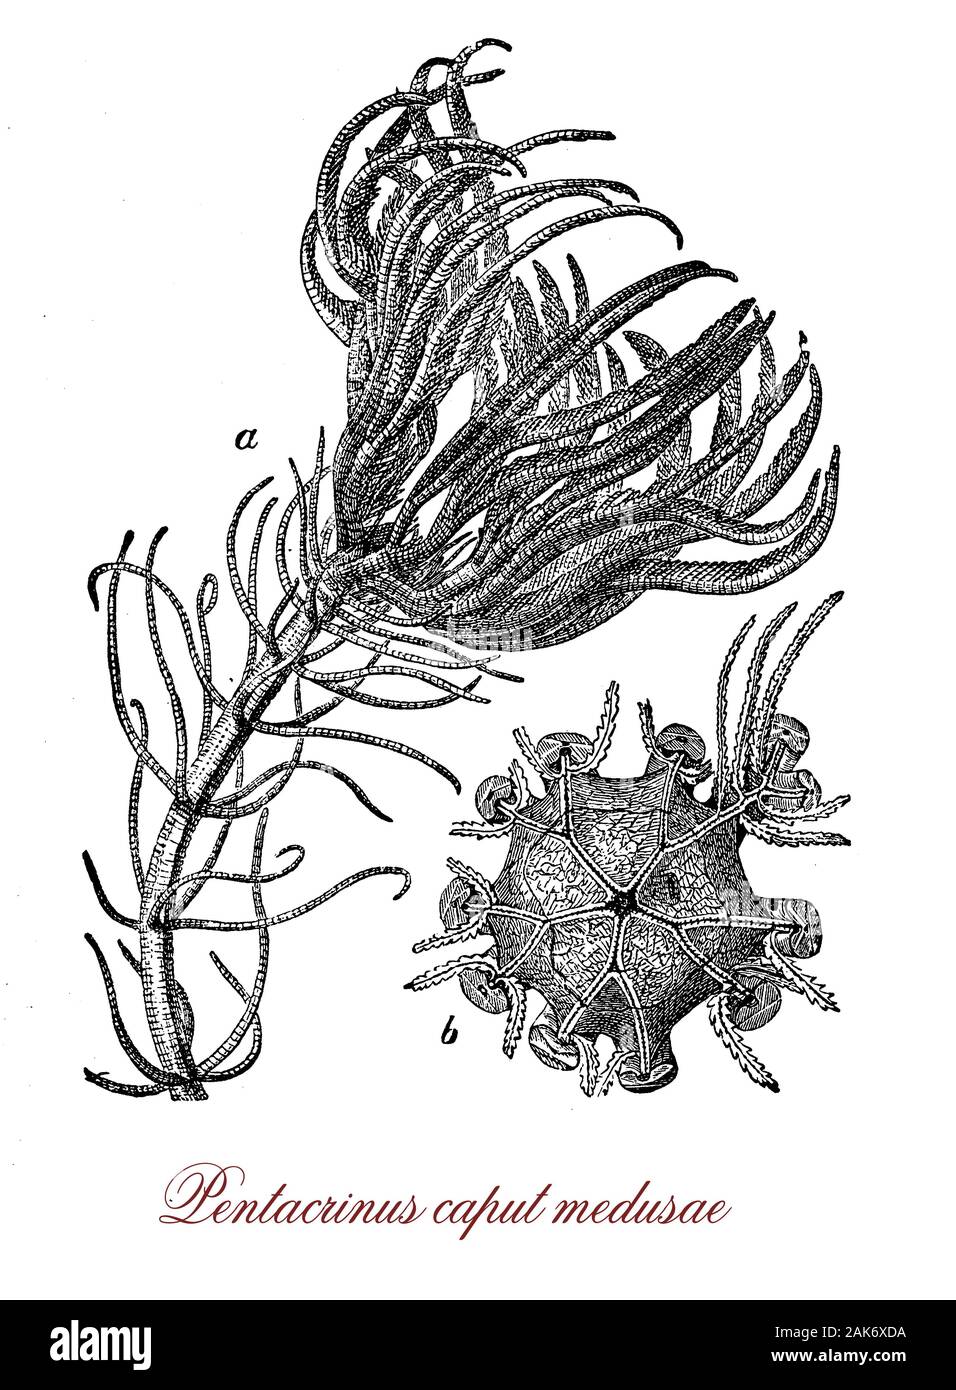 Pentacrinus Caput Medusae è un Atlantic starfish prevalentemente attaccato a rocce marine da una radice Foto Stock